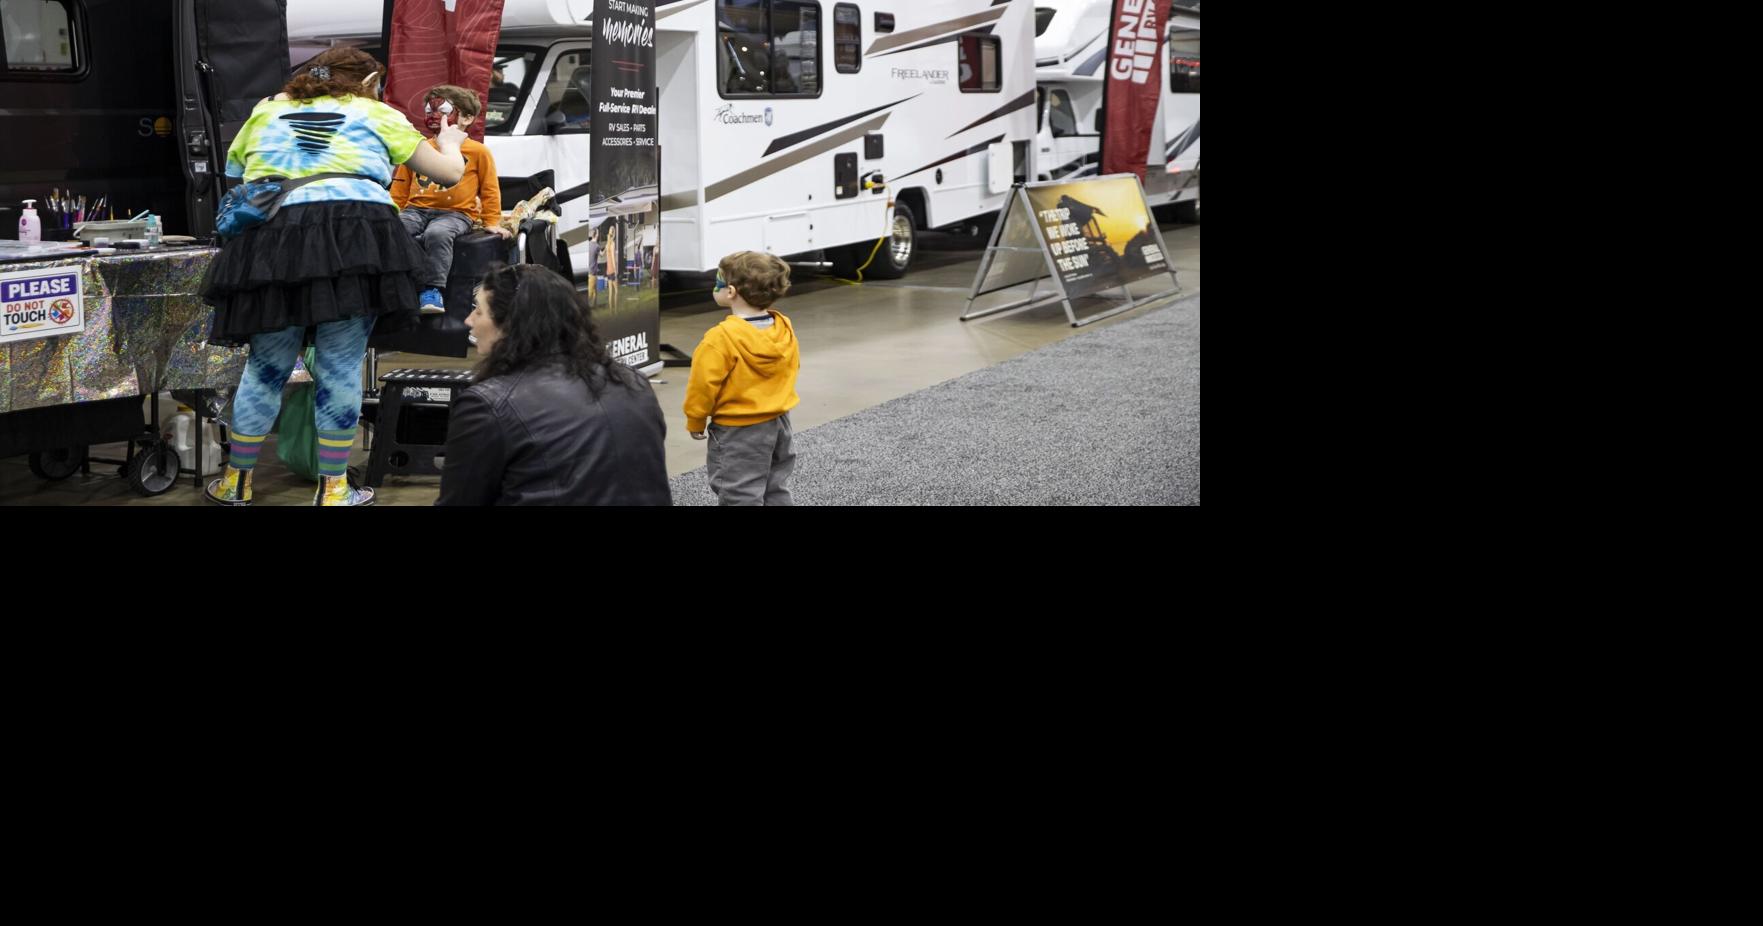 Richmond RV Show camps out at Raceway